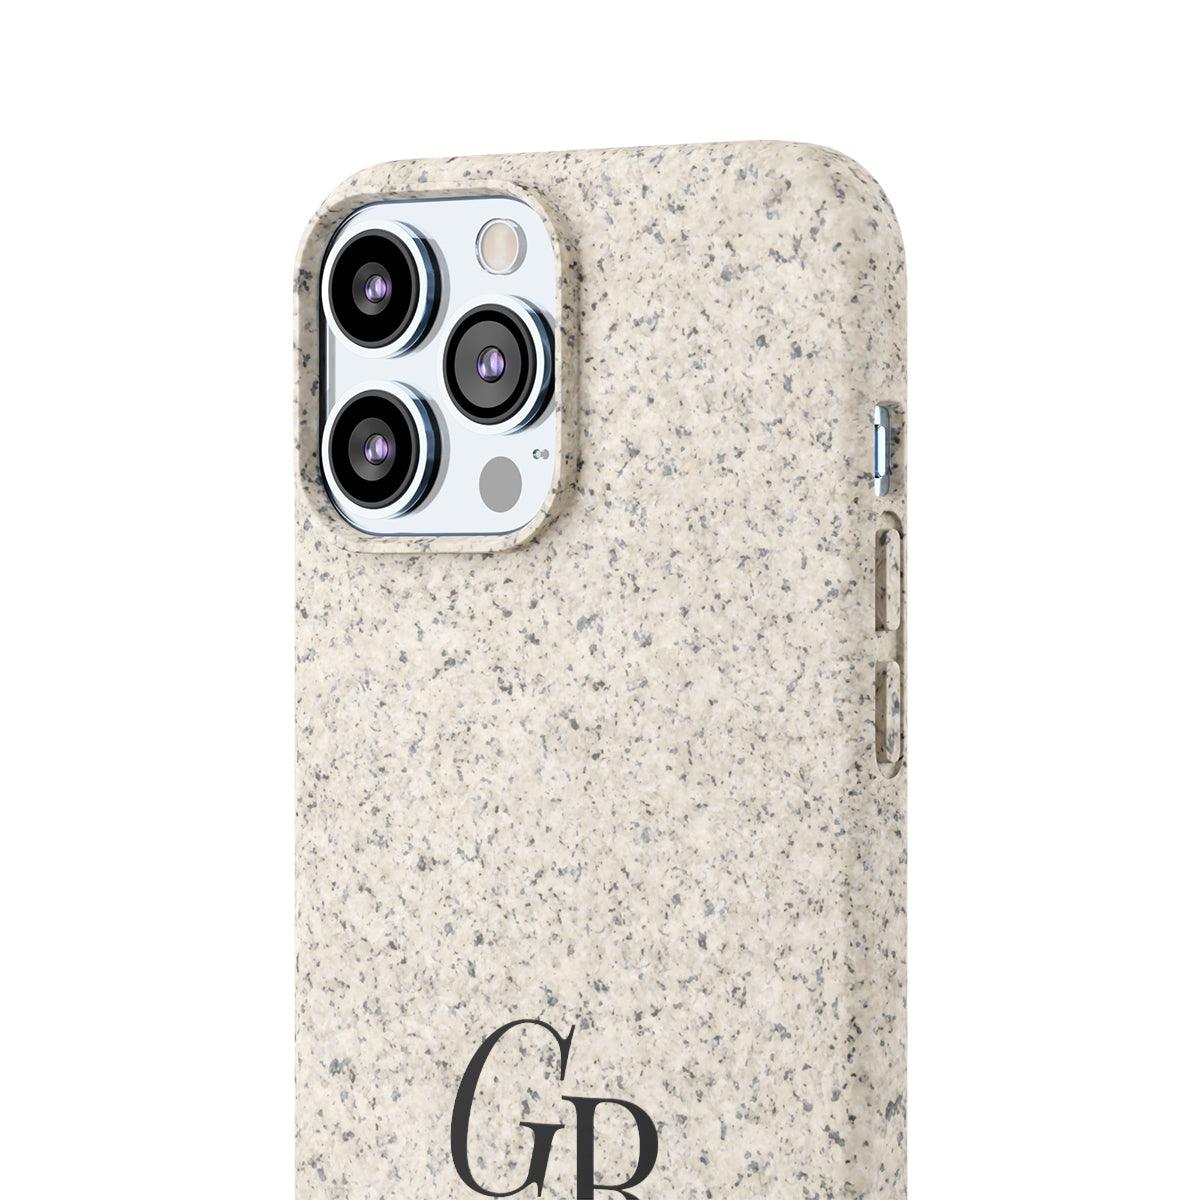 'GR Grand Rapids' Phone Cases (Luxury Goods Parody) | Android & iPhone - Circumspice Michigan